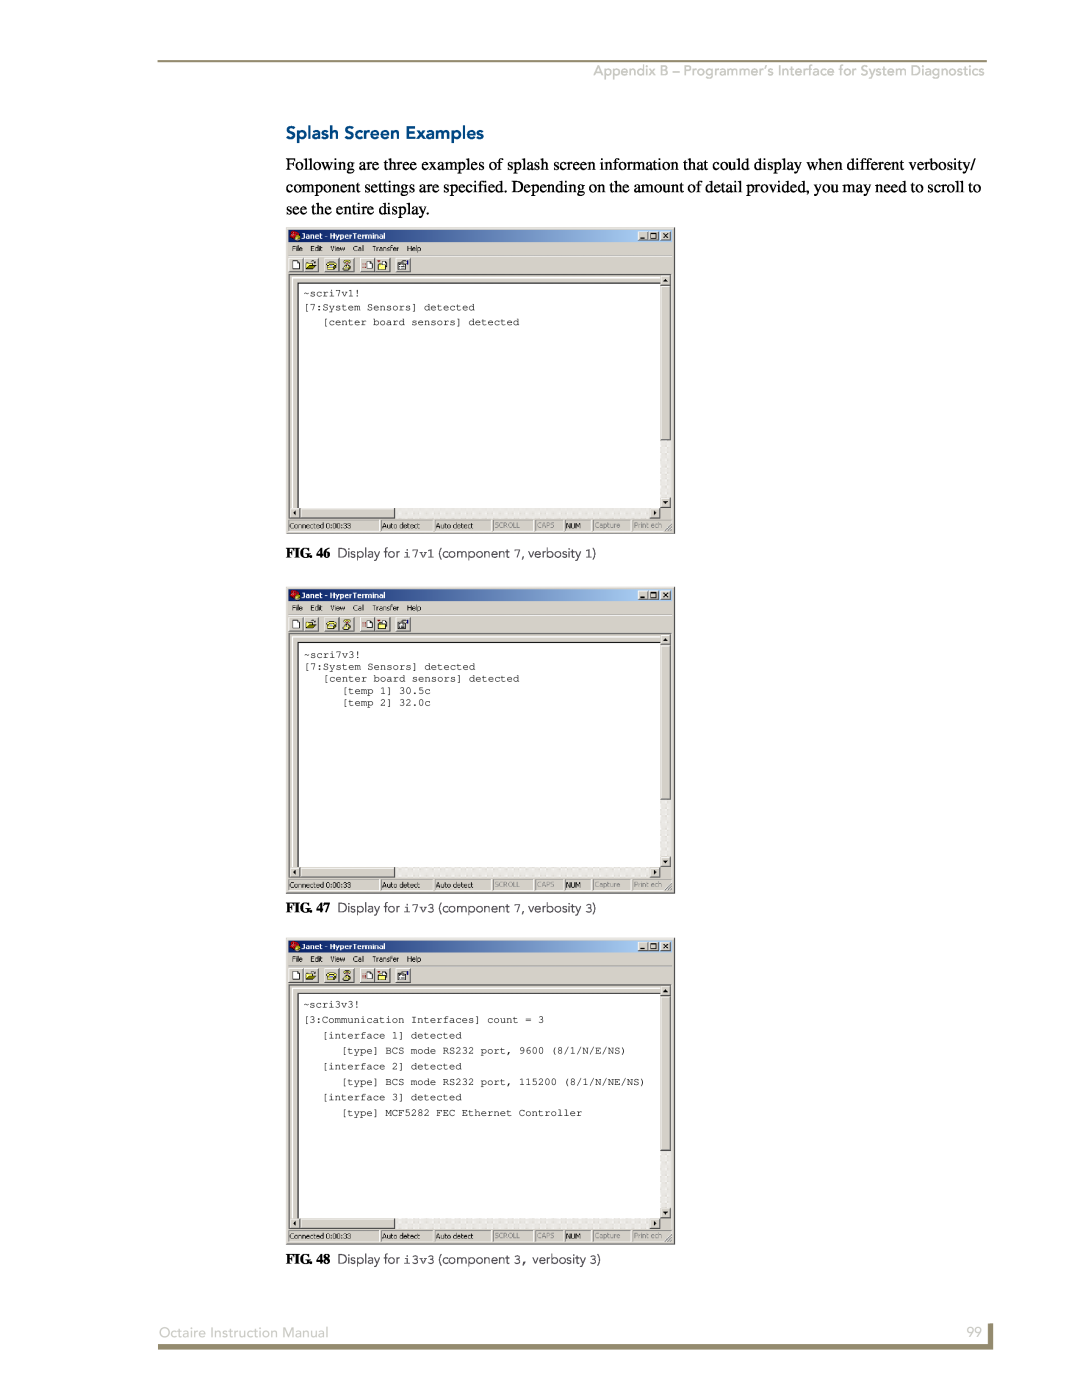 AMX Splash Screen Examples, Appendix B - Programmer’s Interface for System Diagnostics, Octaire Instruction Manual 